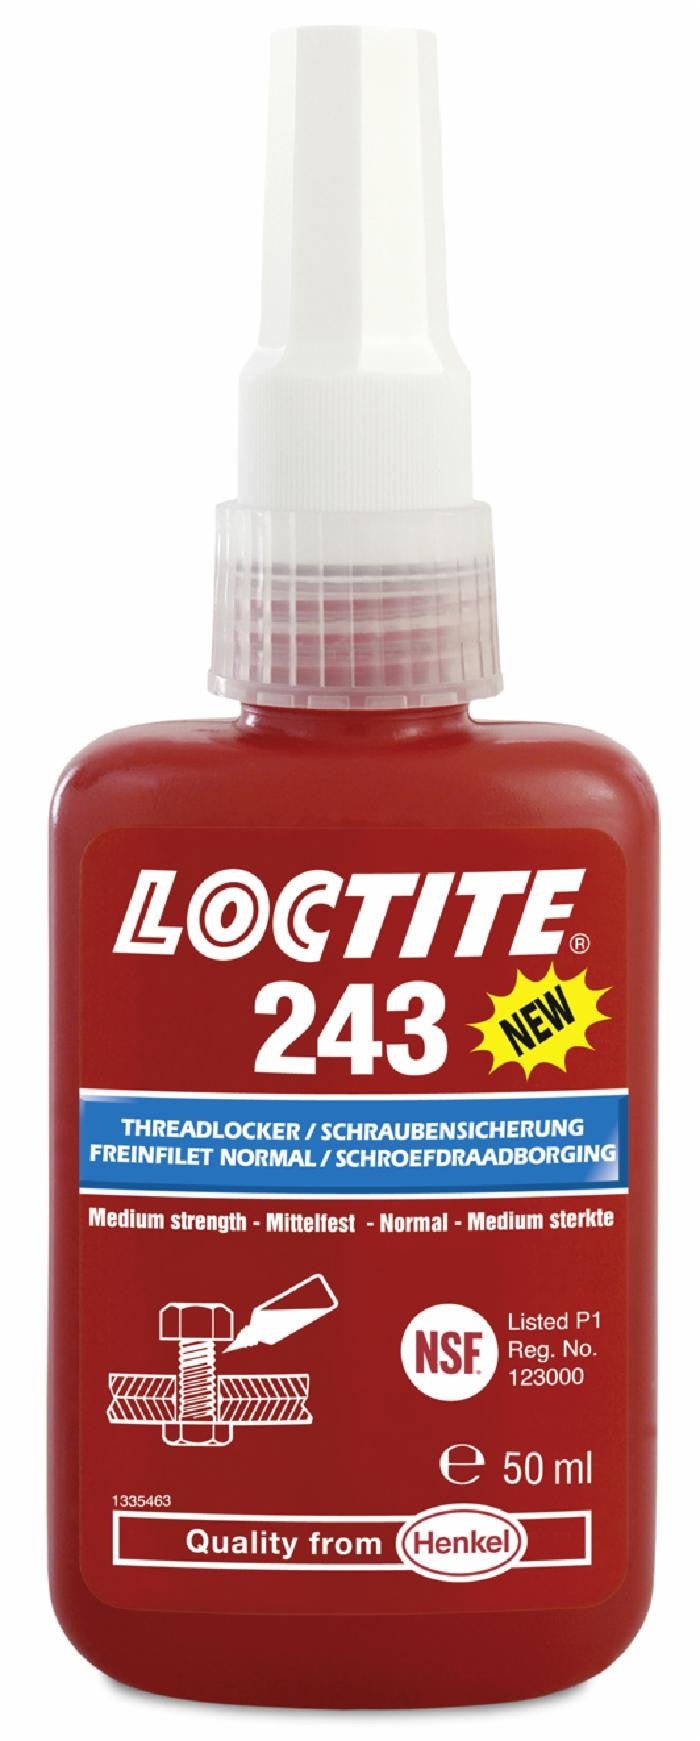 Loctite 243 Frein filet de résistance moyenne bleu 5 ml - achat en